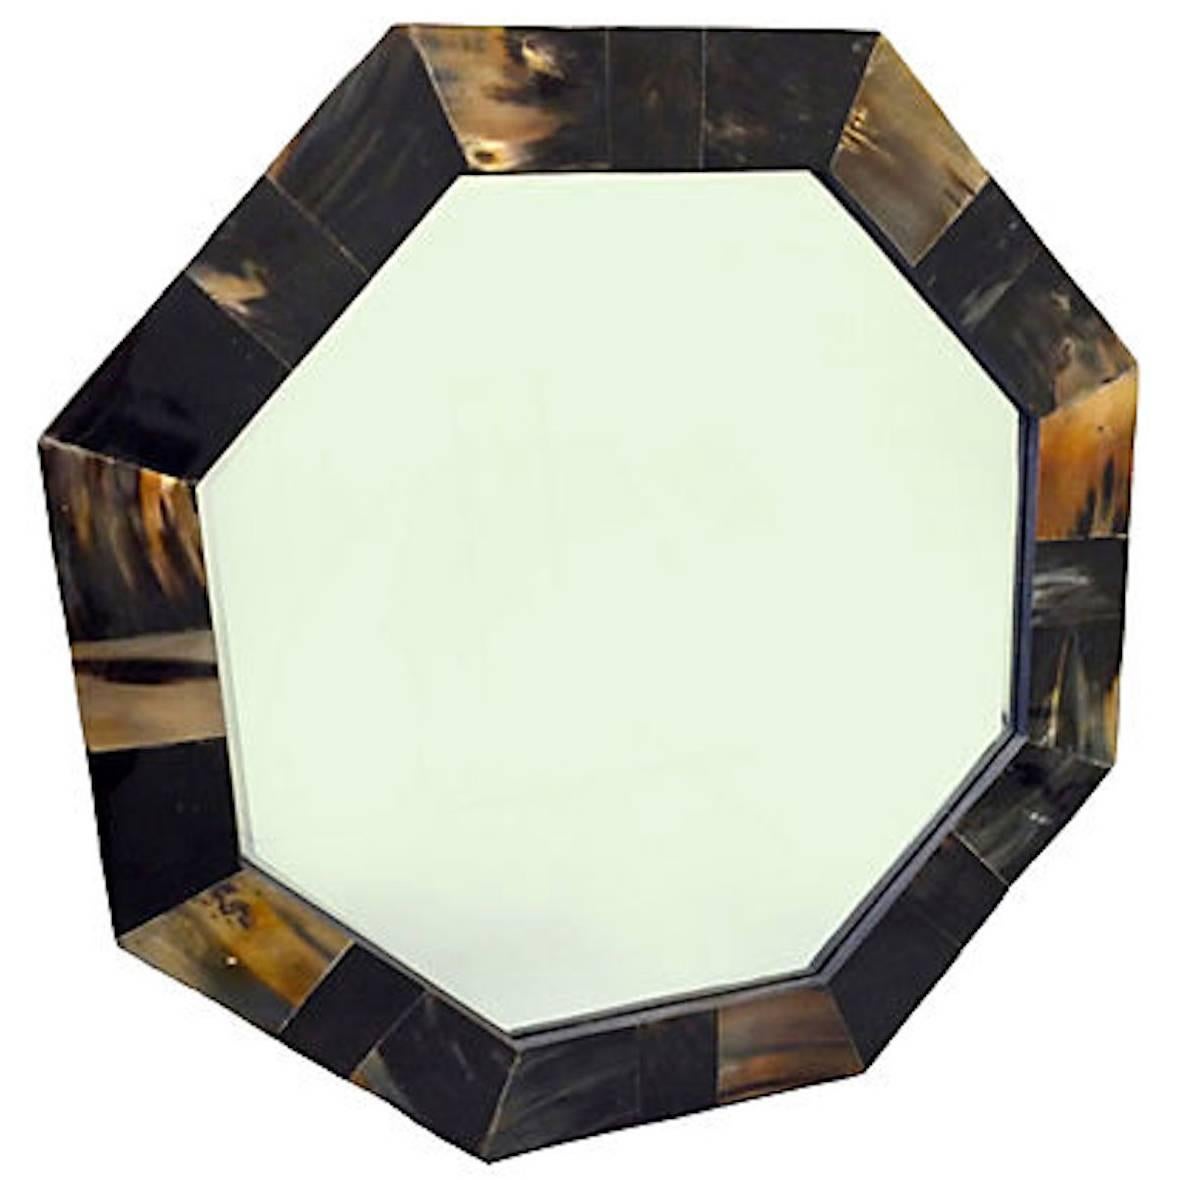 Tessellated Horn Octagonal Mirror